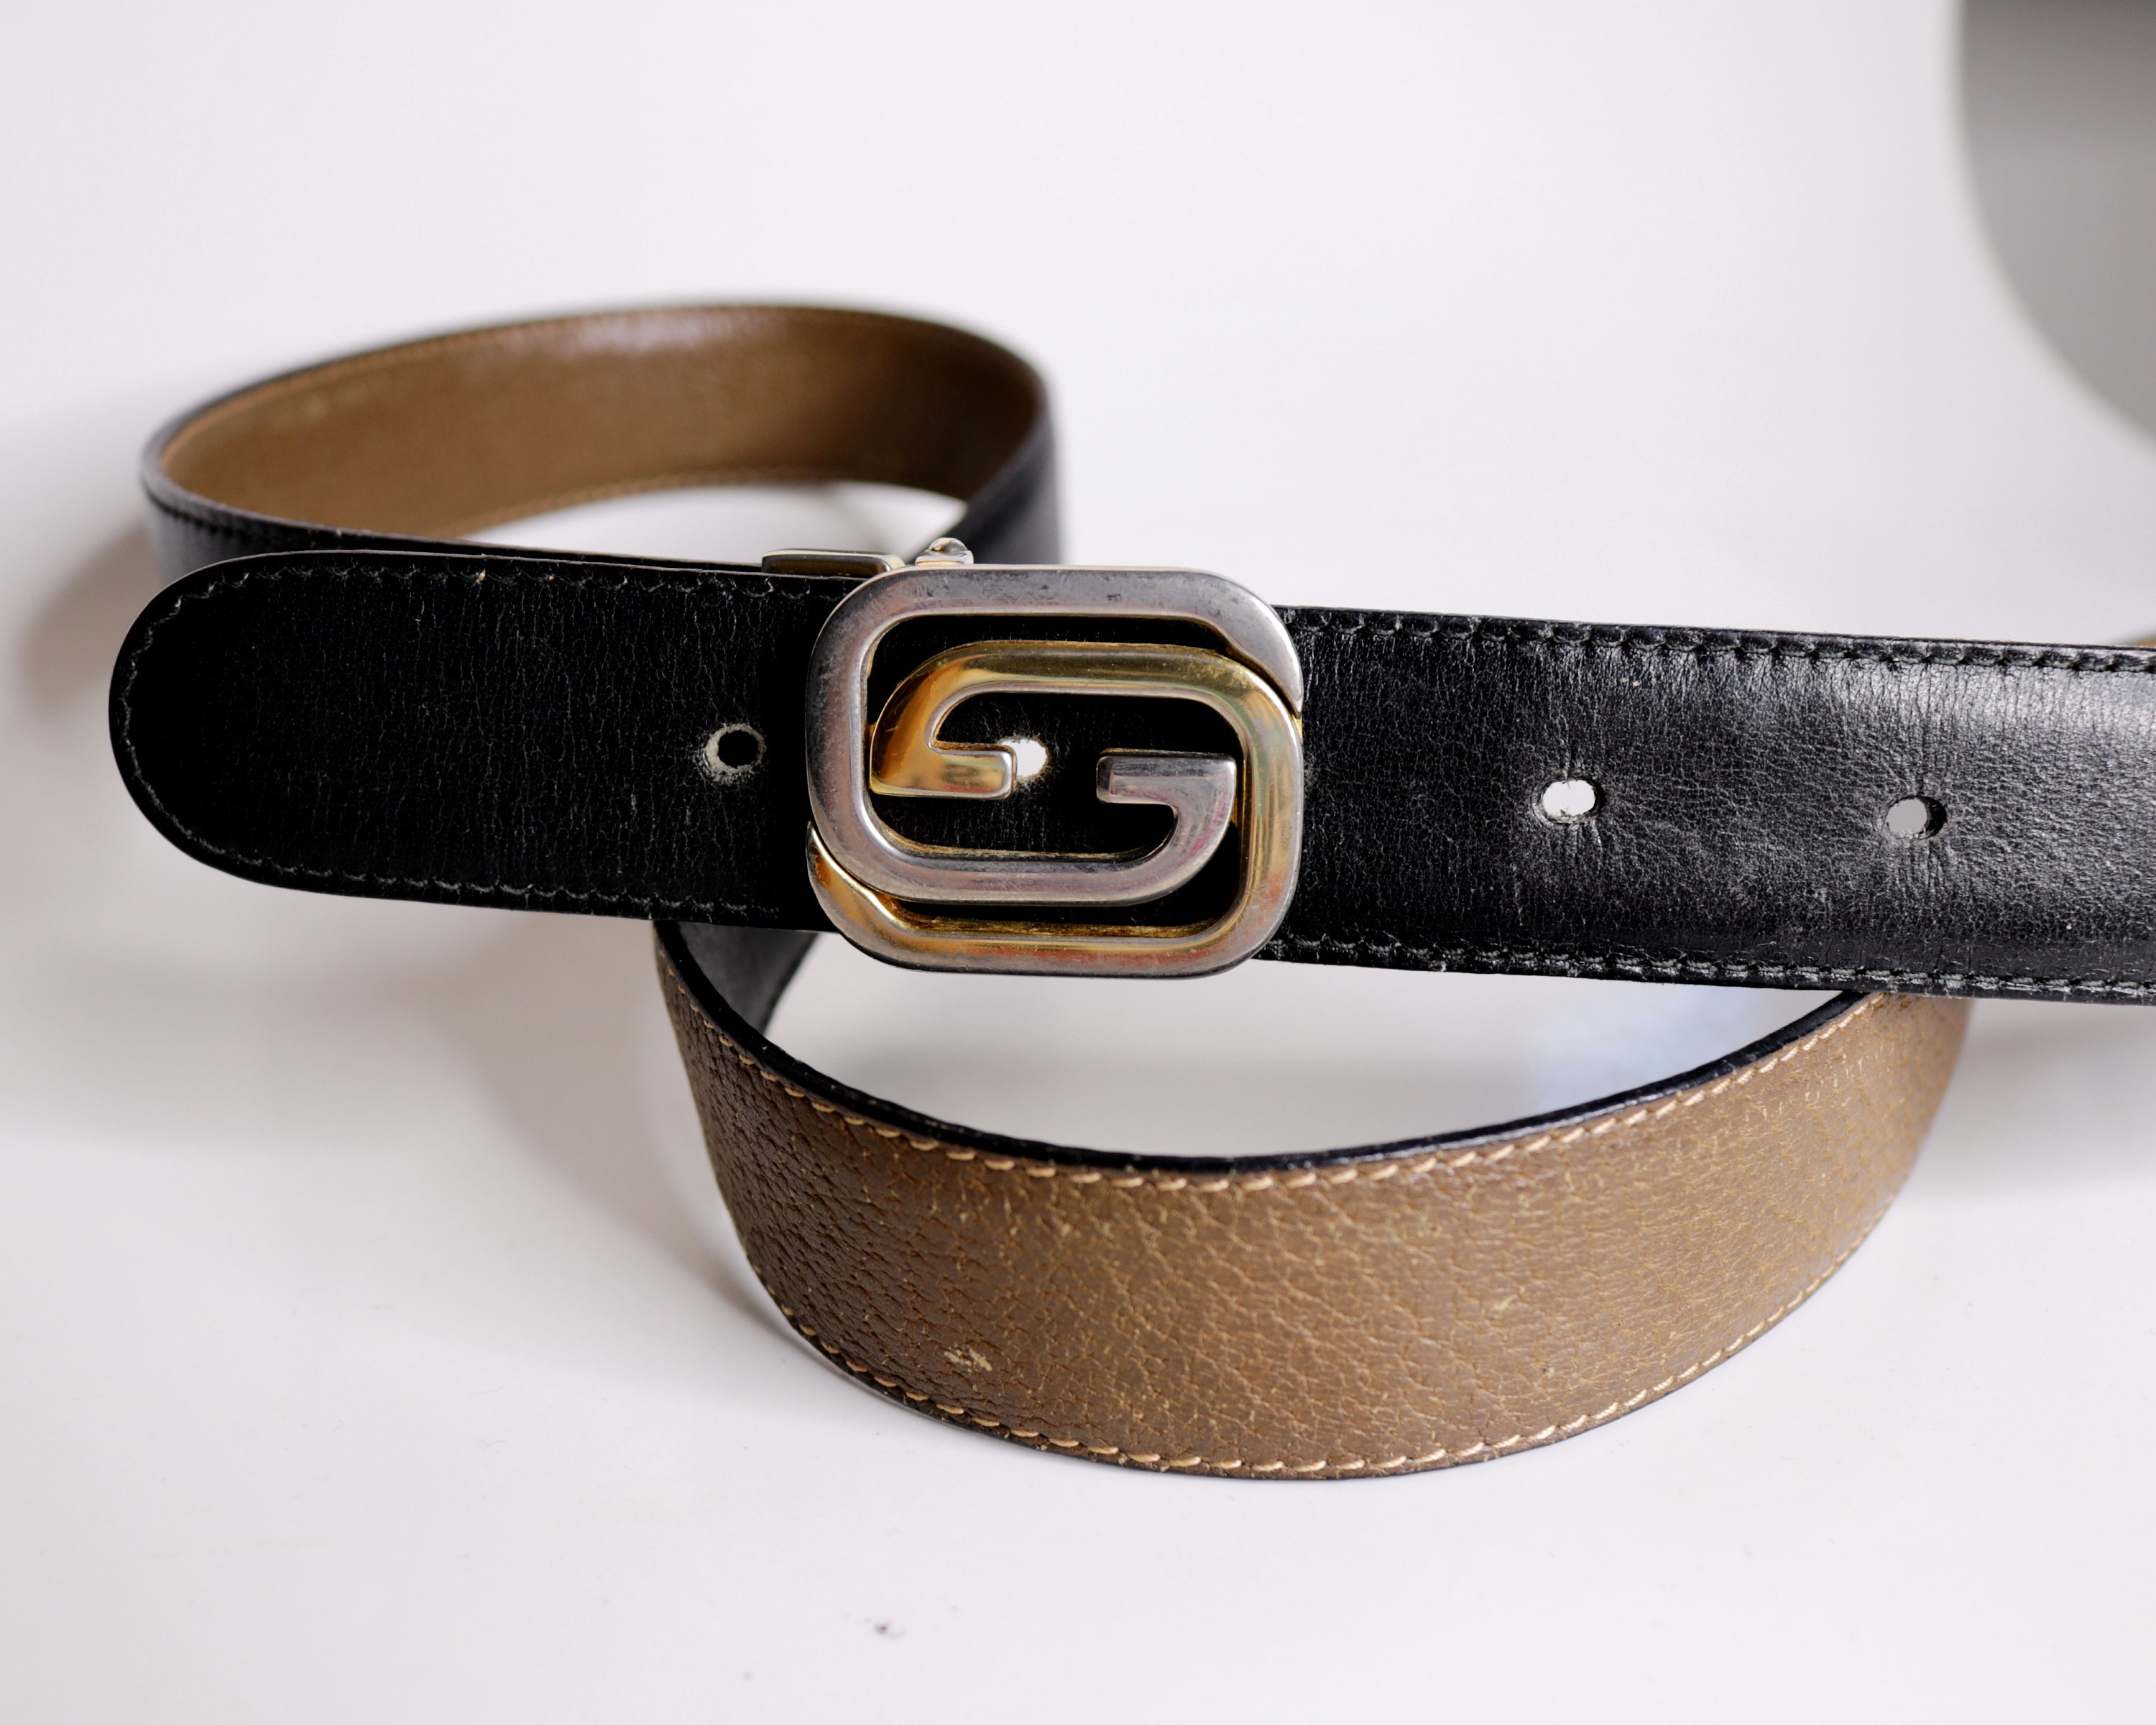 Gucci, Accessories, Authentic Gucci Logo Leather Belt